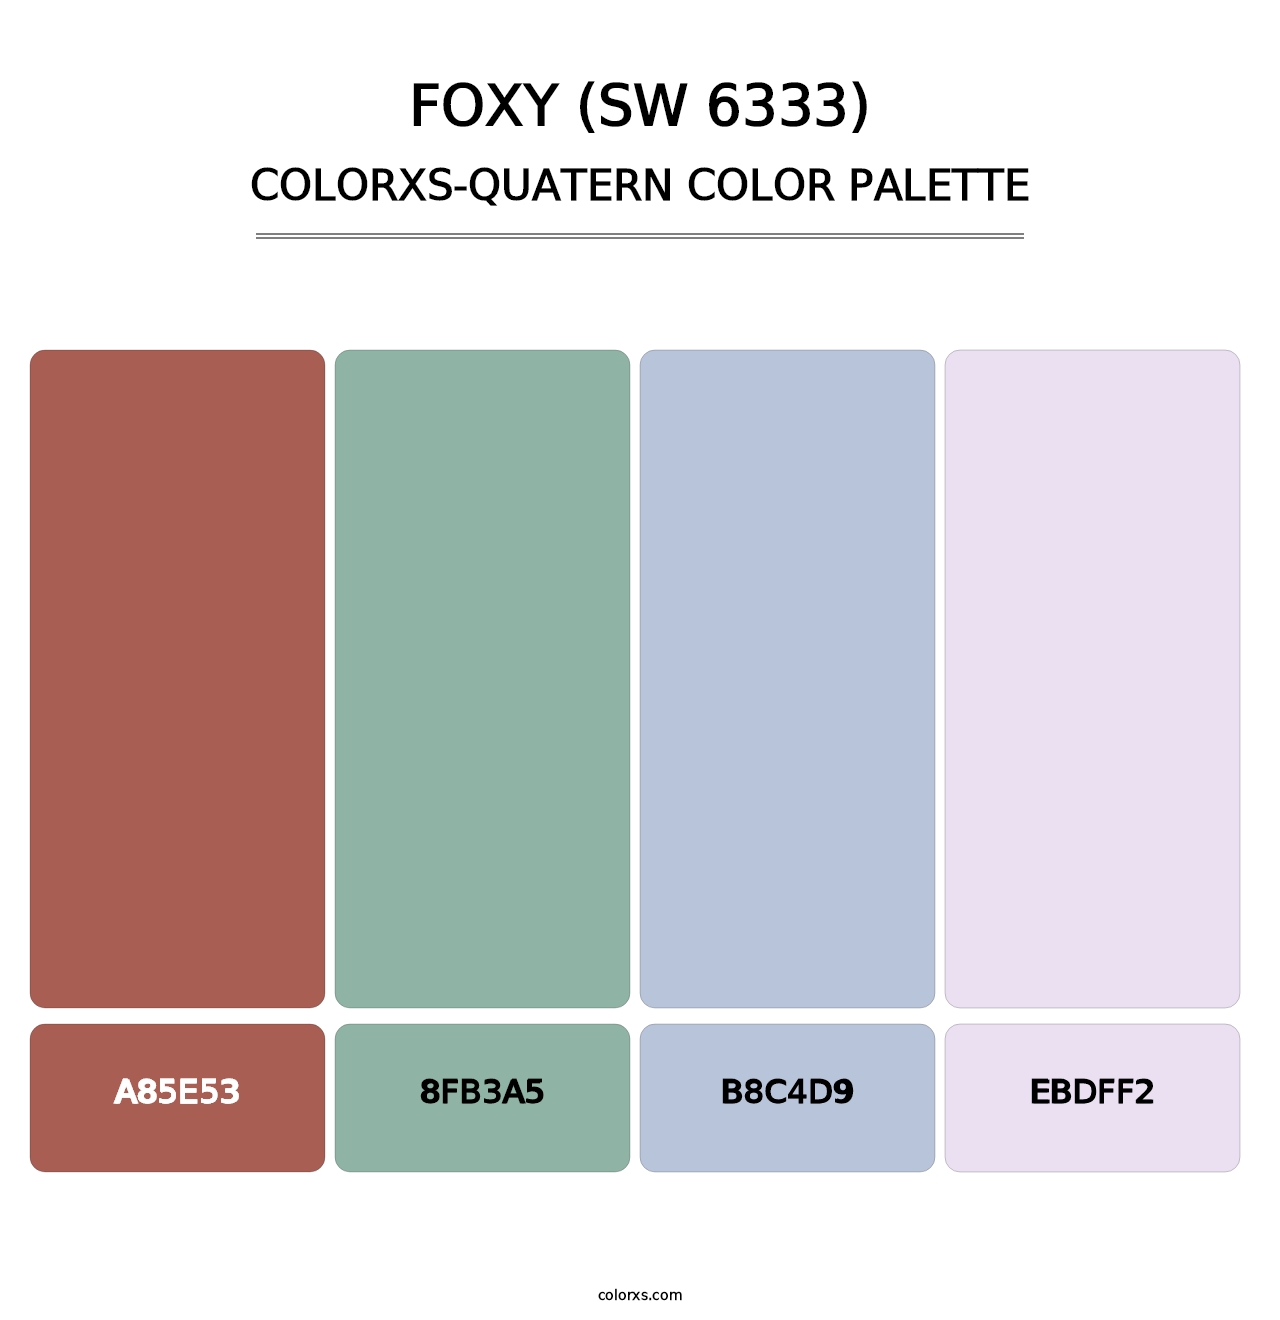 Foxy (SW 6333) - Colorxs Quatern Palette